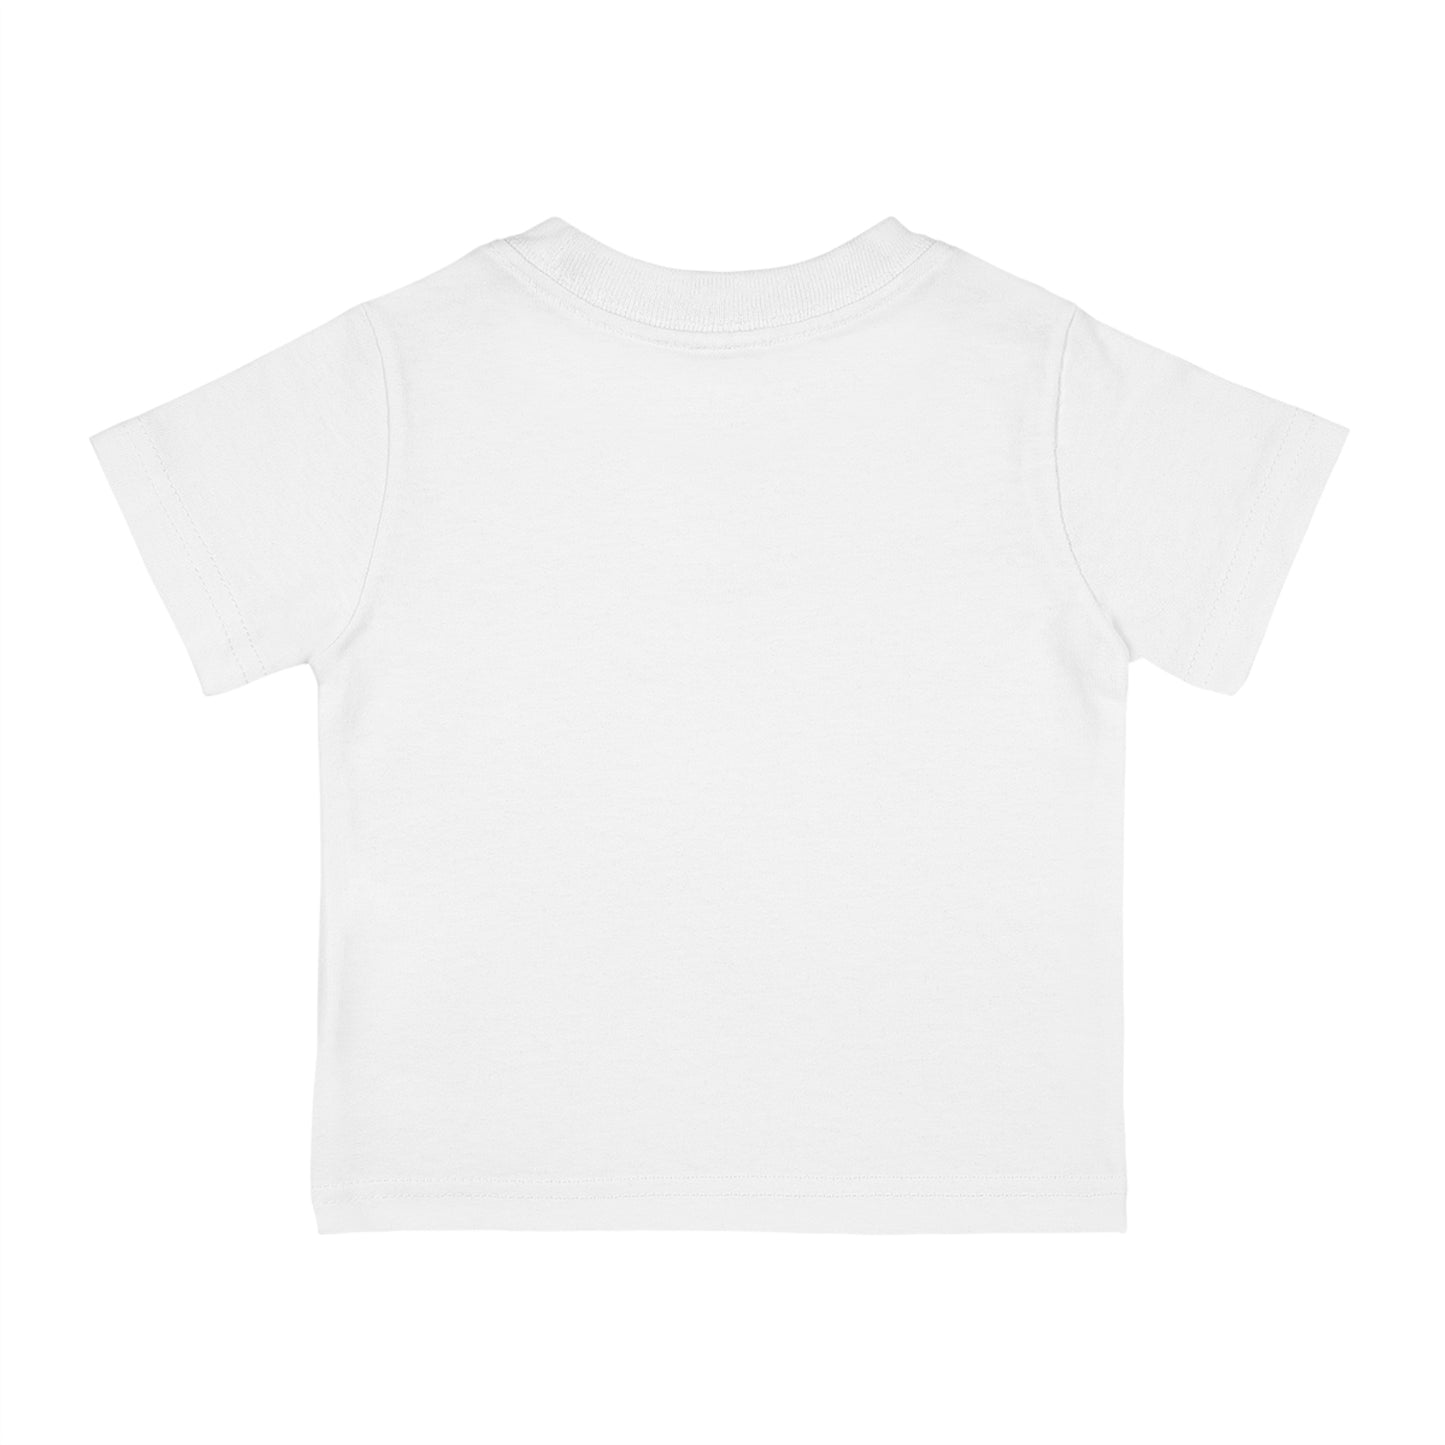 Detroit 'Old English D' Infant T-Shirt (Patriotic Edition) | Short Sleeve